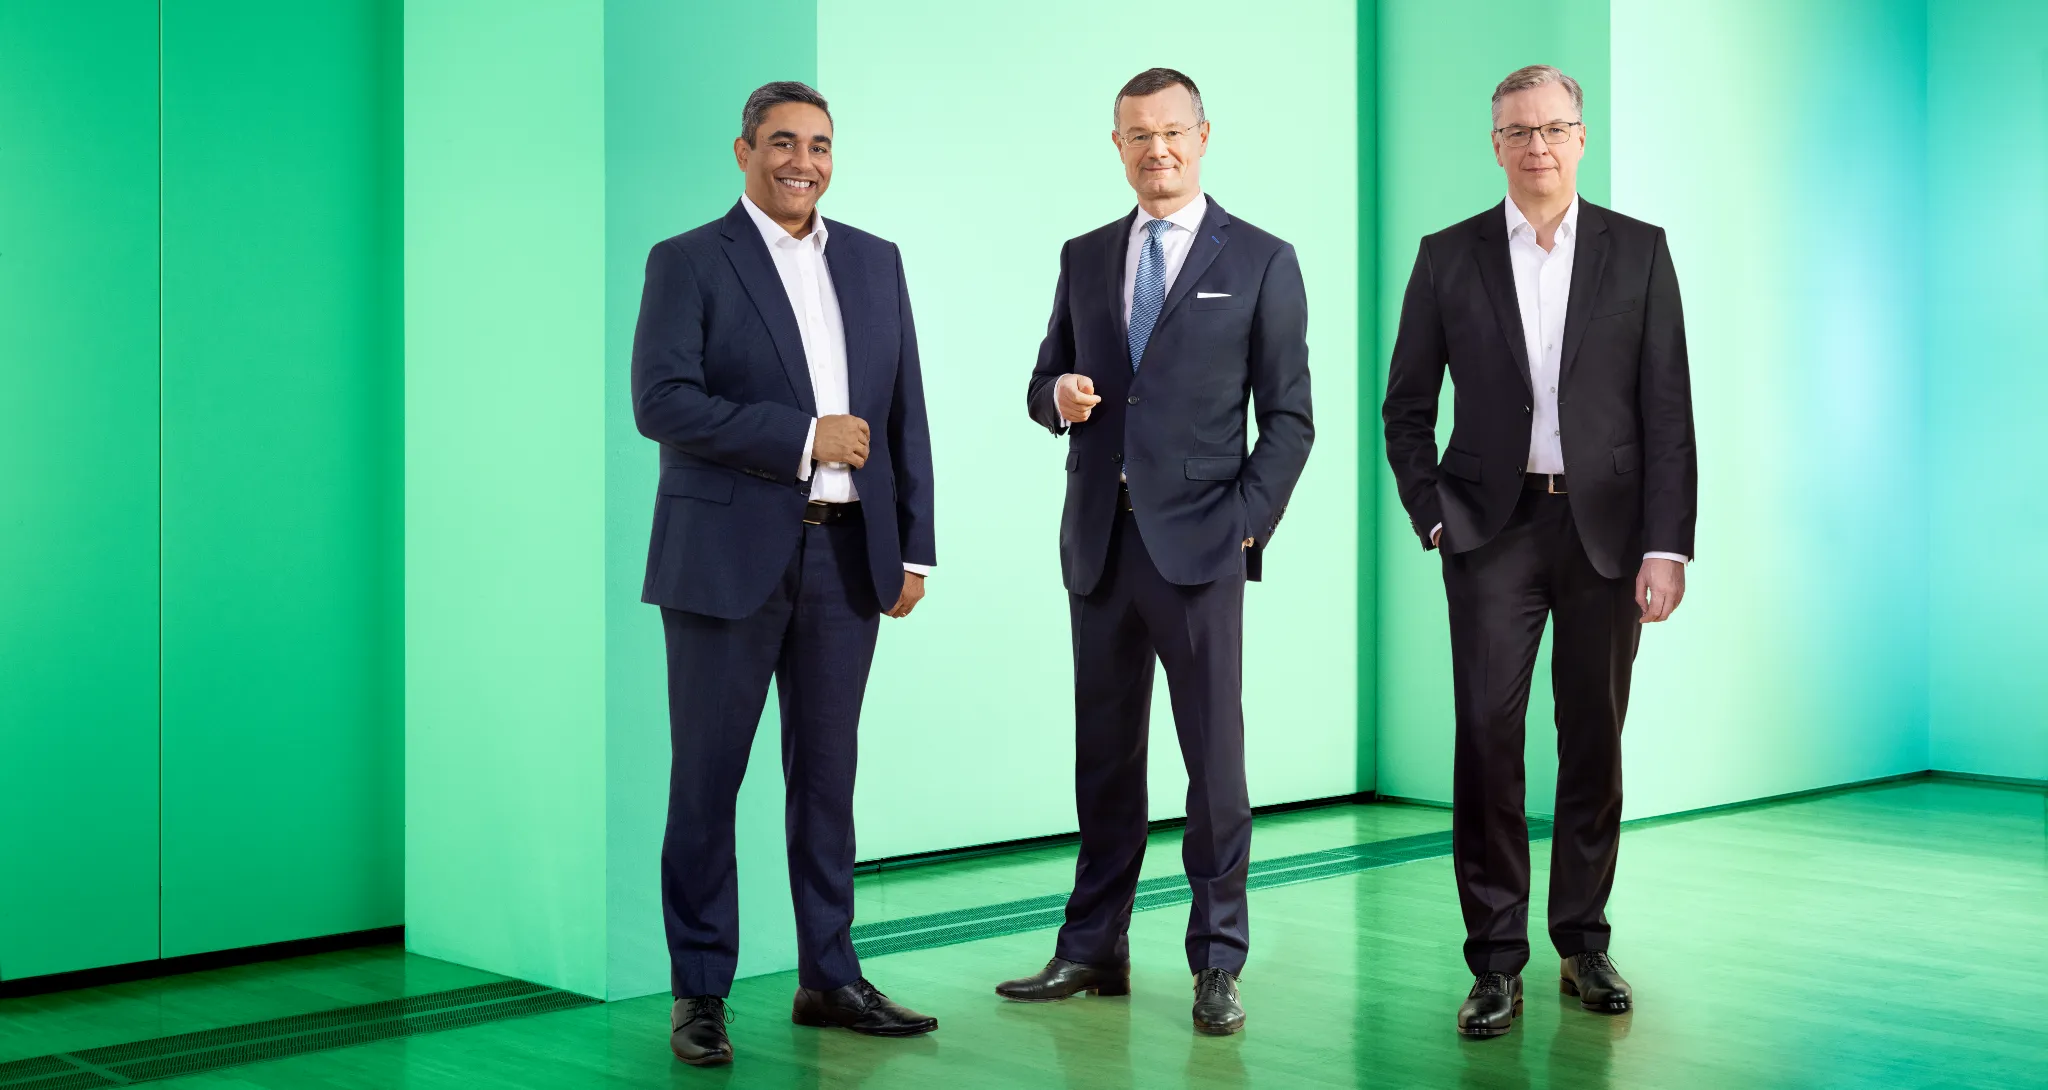 The Management Board - Ishan Palit, Matthias J. Rapp & Johannes Bussmann